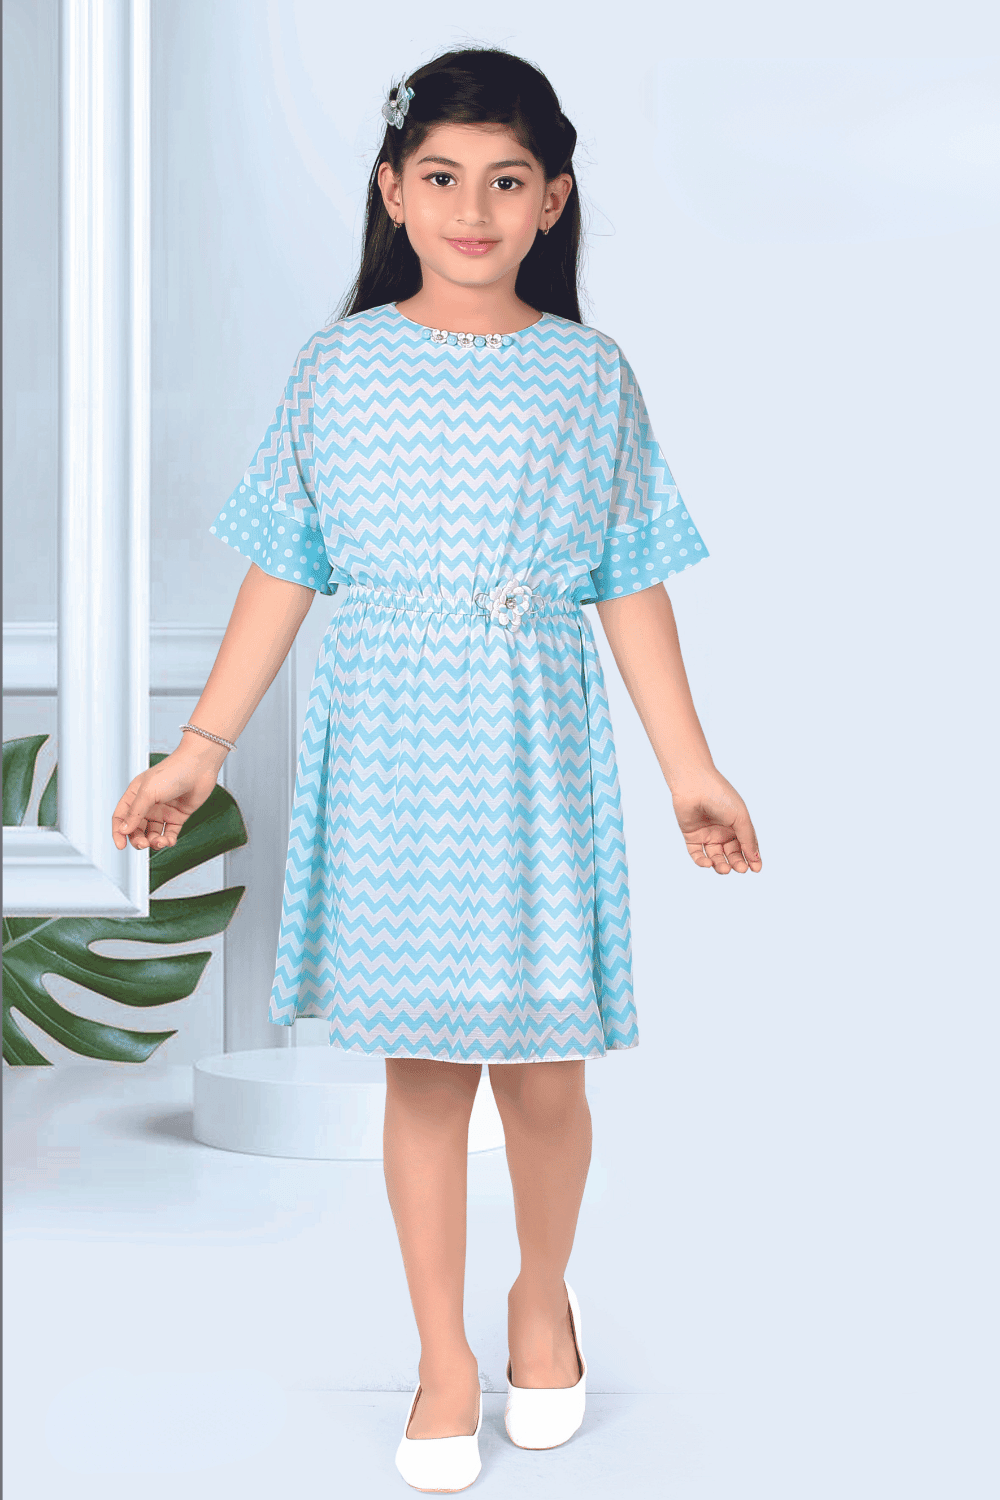 Sky Blue with White Leheriya Print Poncho Styled Short Frock For Girls - Seasons Chennai